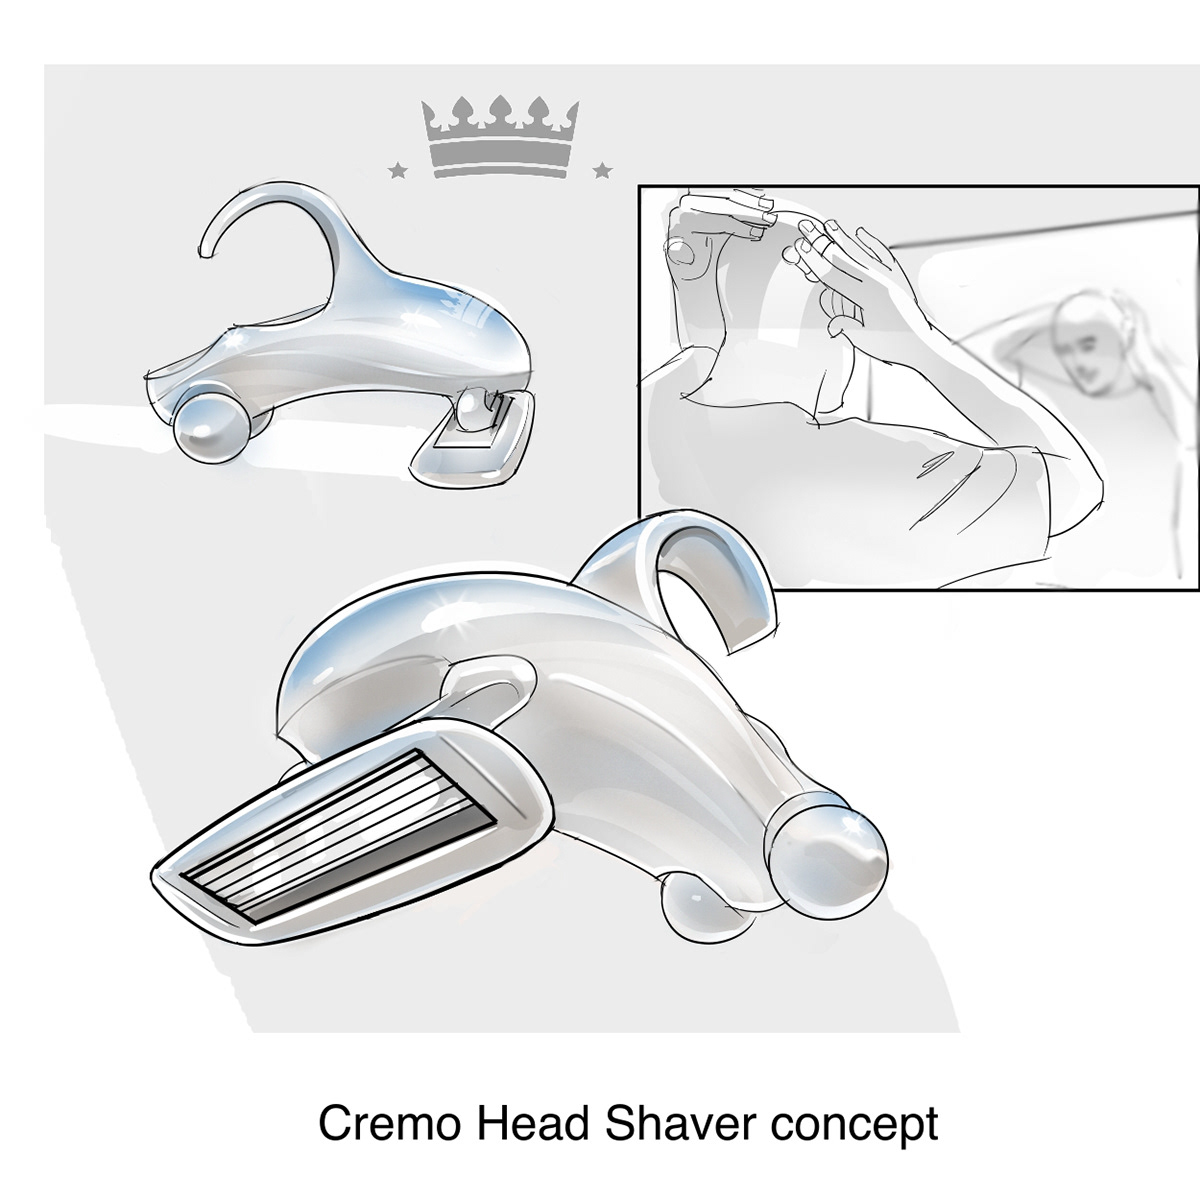 Cremo concept RV beard Hair Product